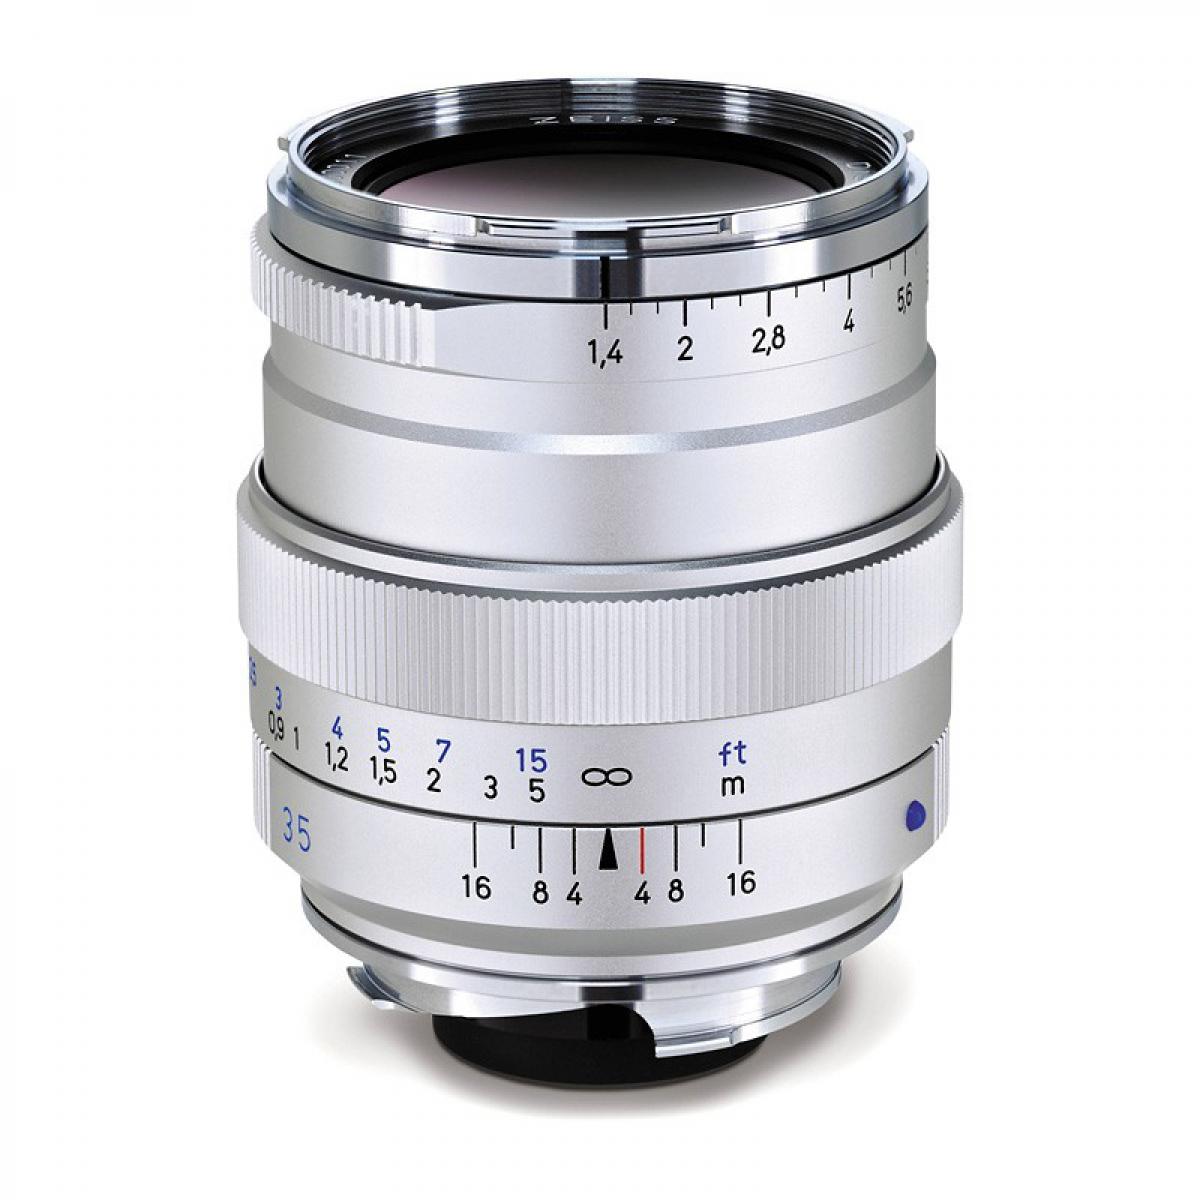 Carl Zeiss - ZEISS Objectif Distagon T* 35mm f/1.4 ZM Argent compatible avec Leica - Objectif Photo